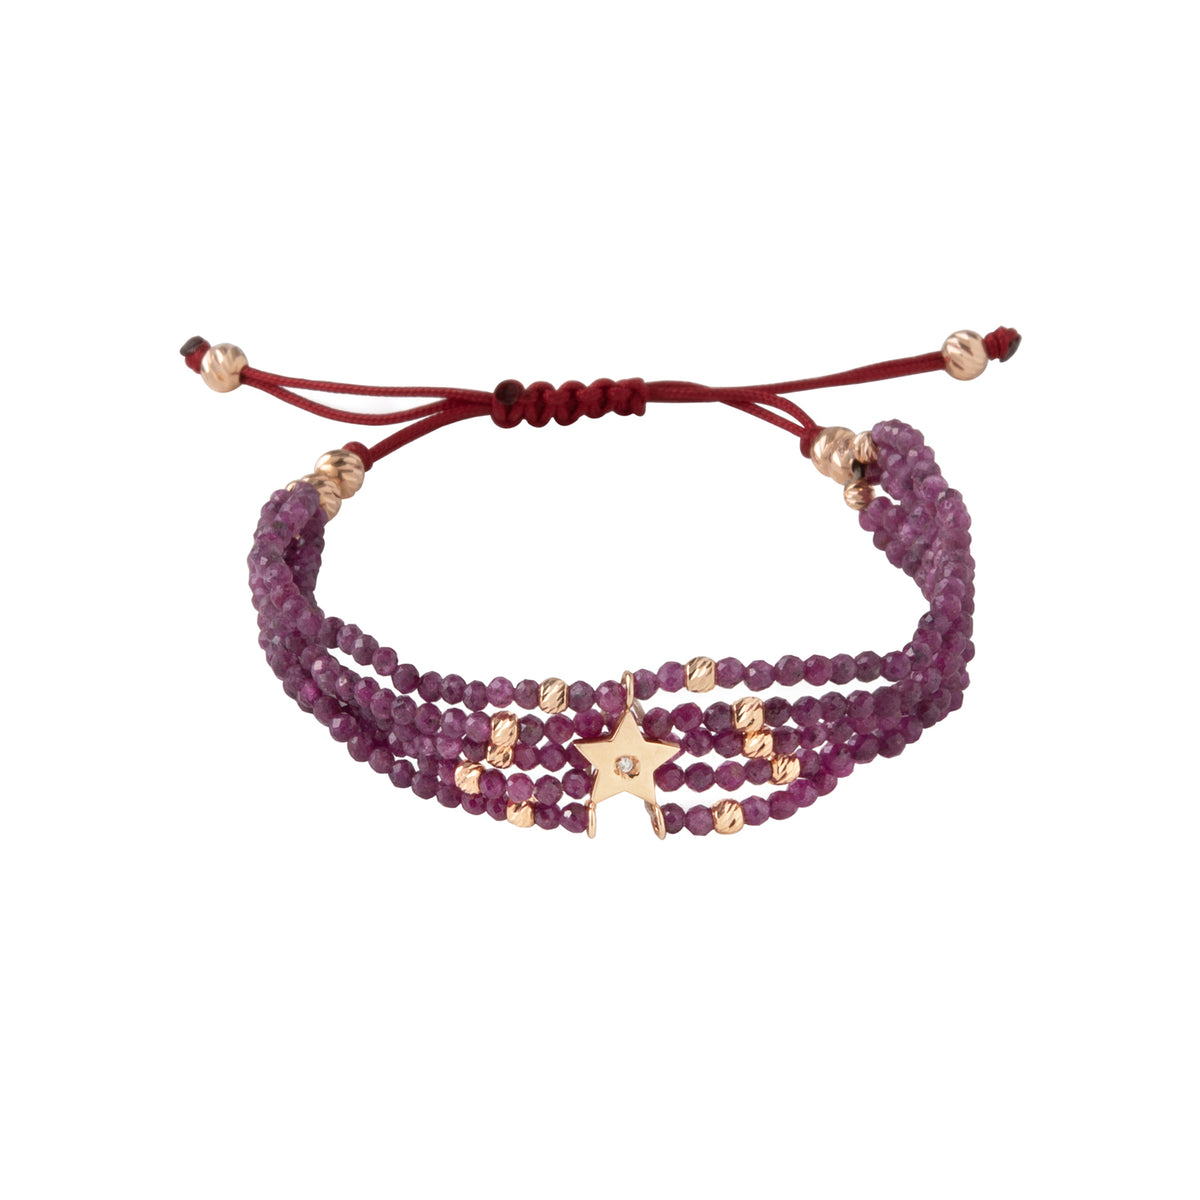 Star bracelet with ruby beads